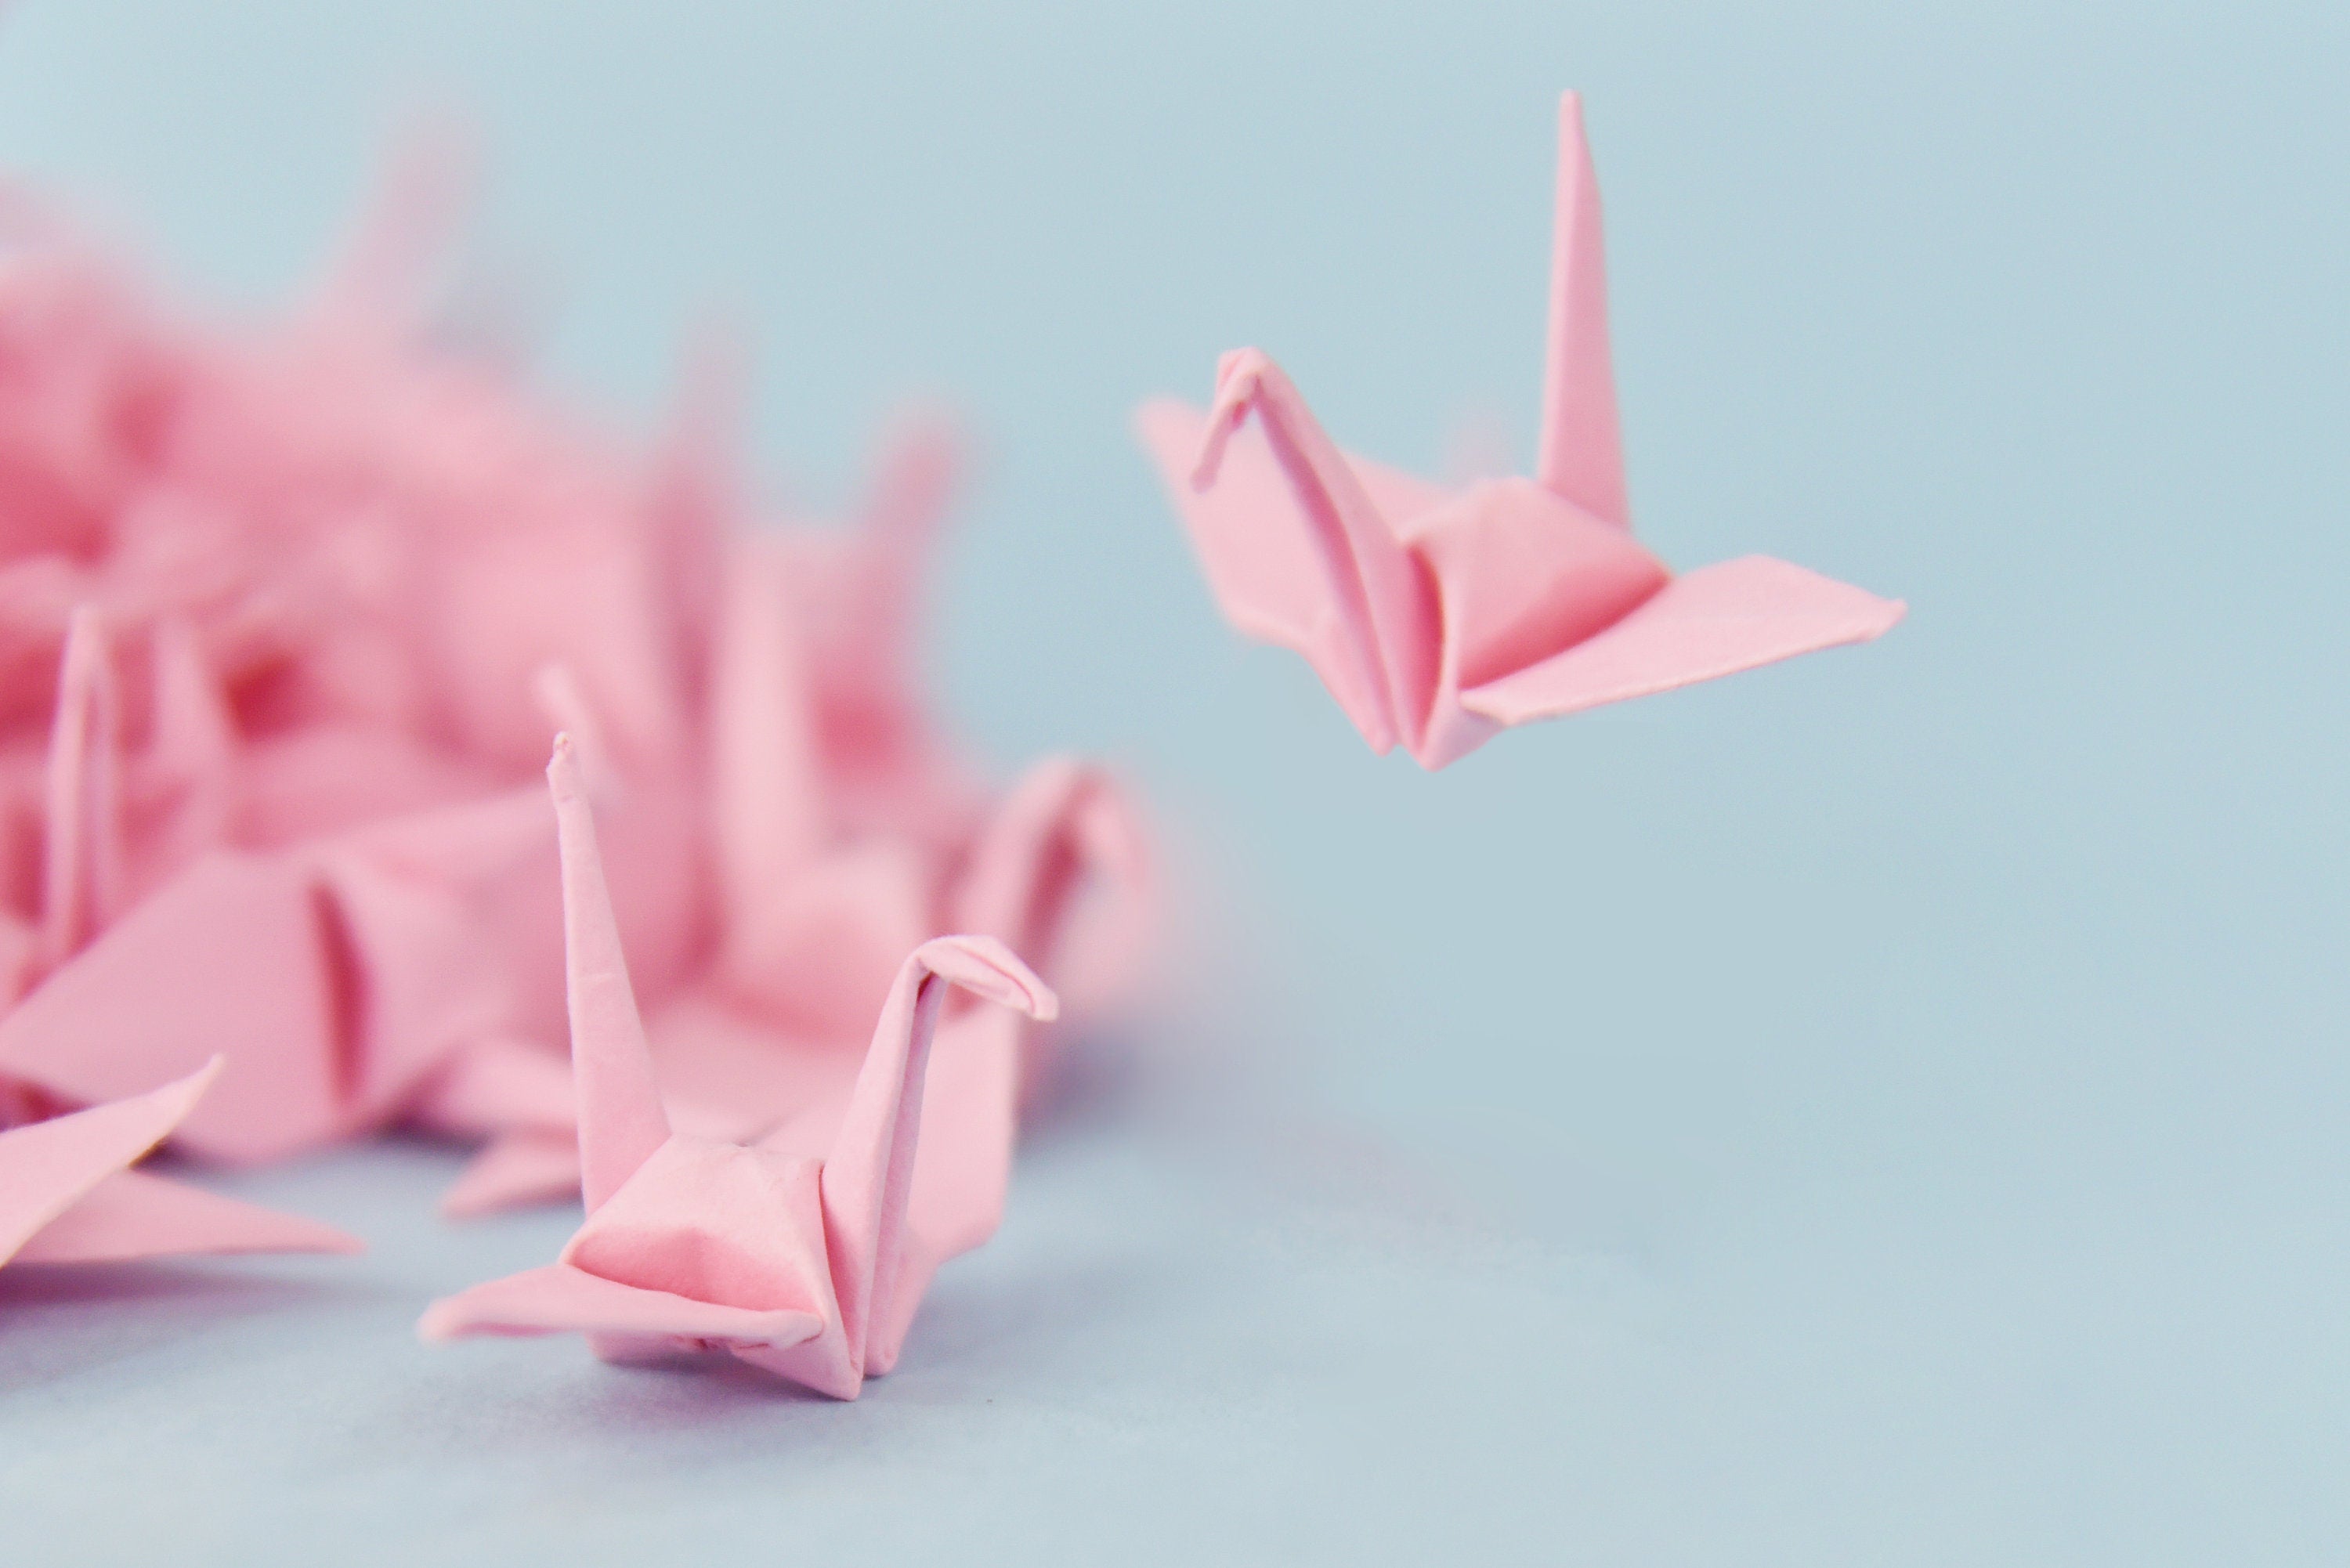 100 Origami Paper Crane Pink Origami Cranes Pre Made Small 1.5x1.5 inches for Wedding Decor, Anniversary Gift, Valentine